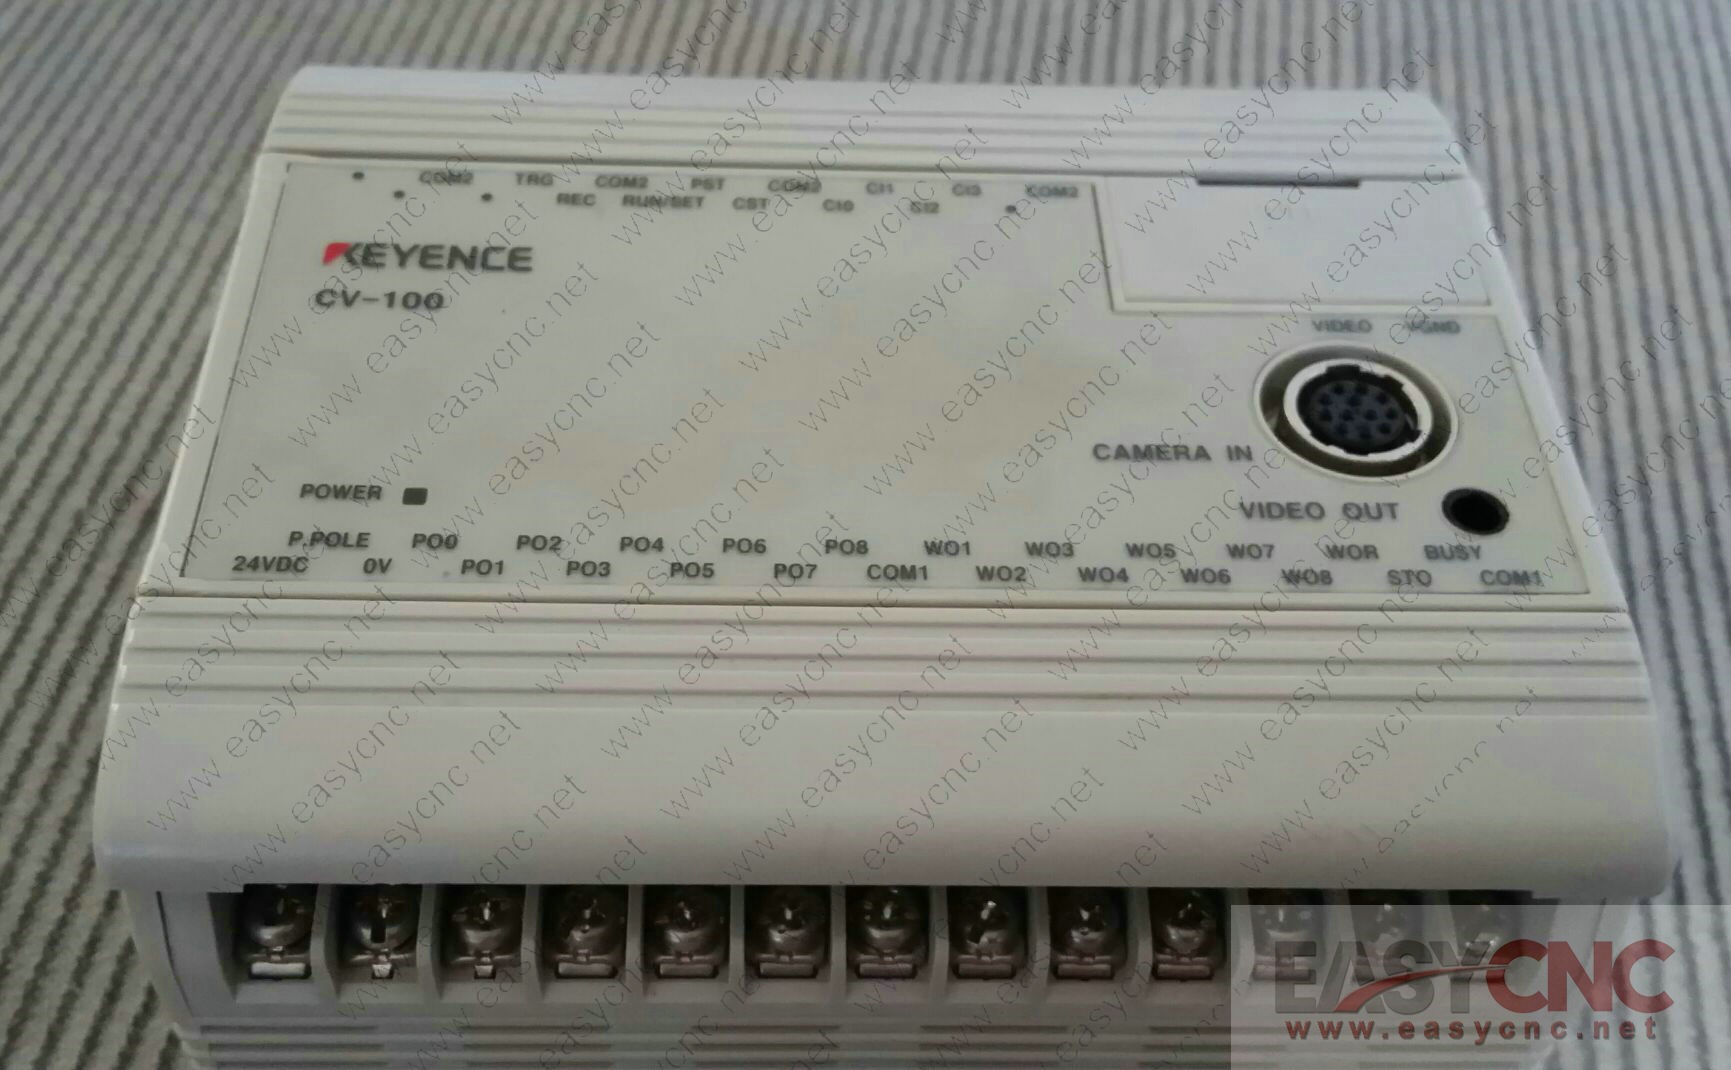 CV-100 Keyence camera controller used